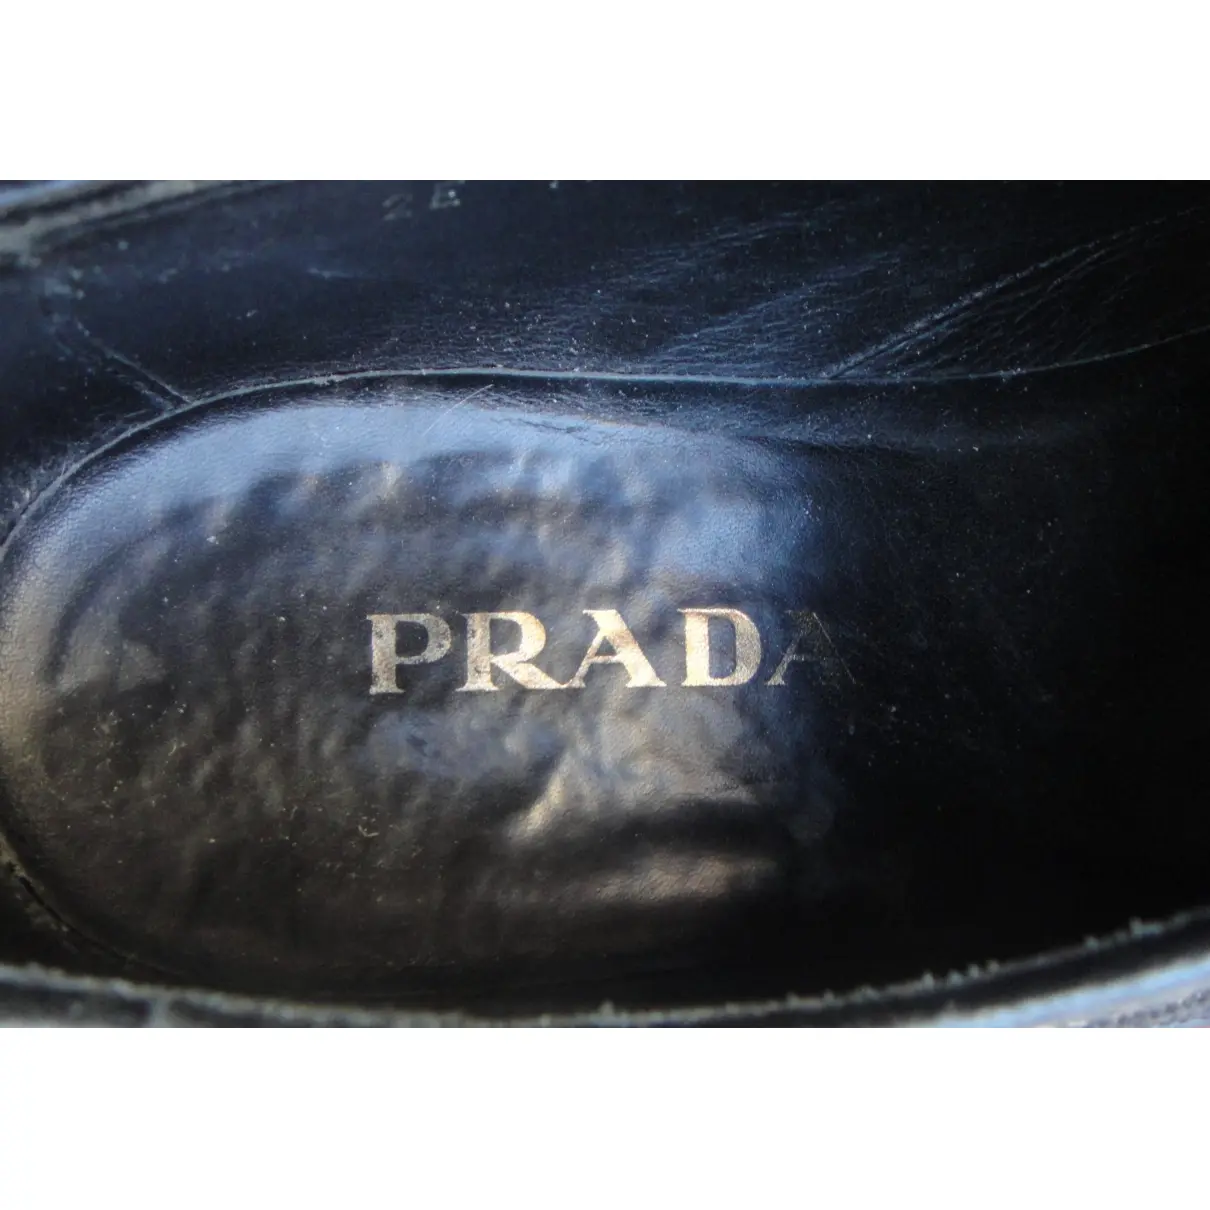 Patent leather lace ups Prada